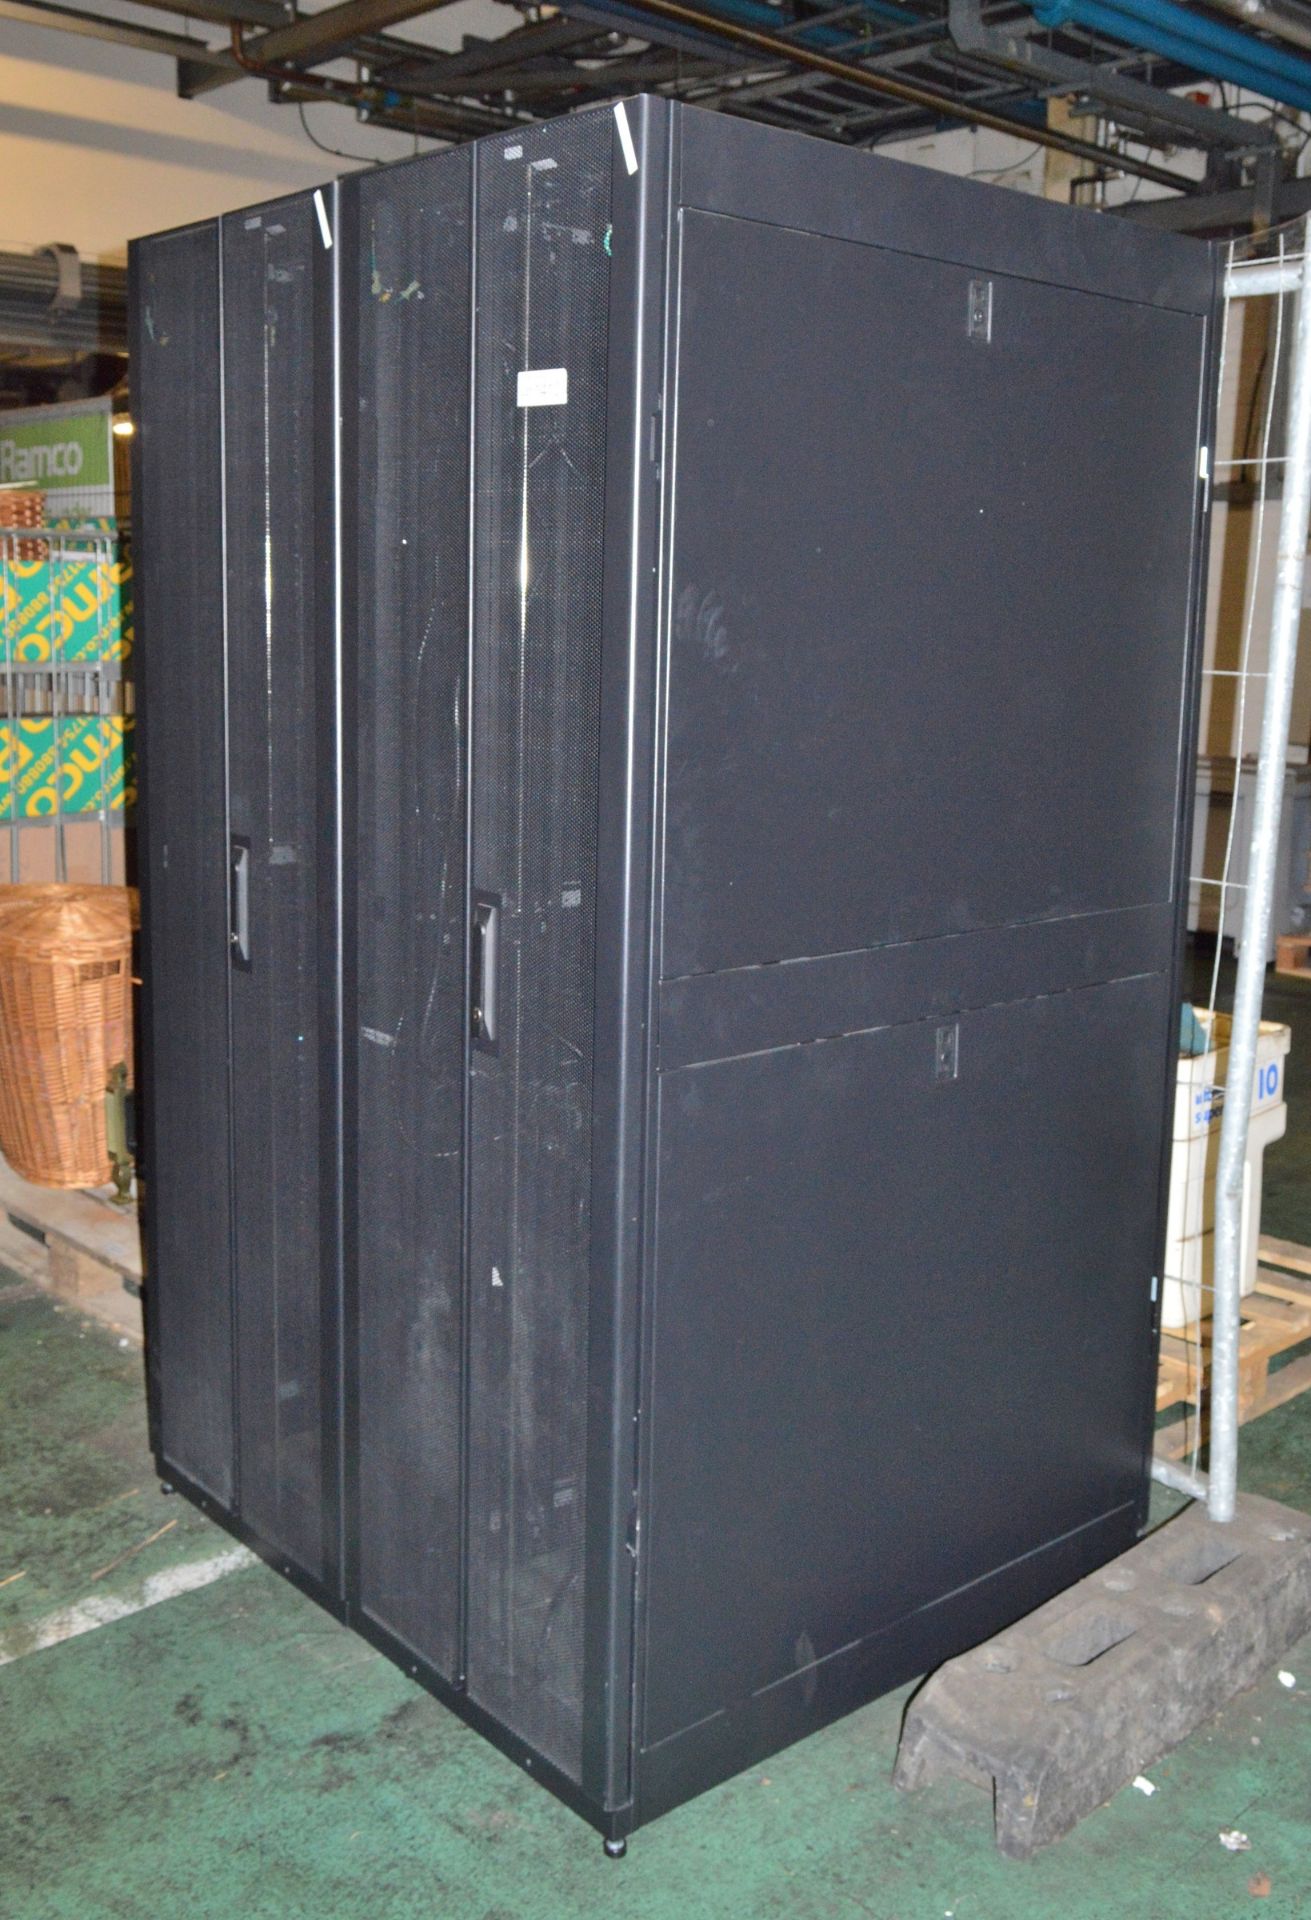 2x Server / Electronic Racks APC Schneider - 1200mm wide x 1070mm deep x 2000mm high - Image 2 of 4